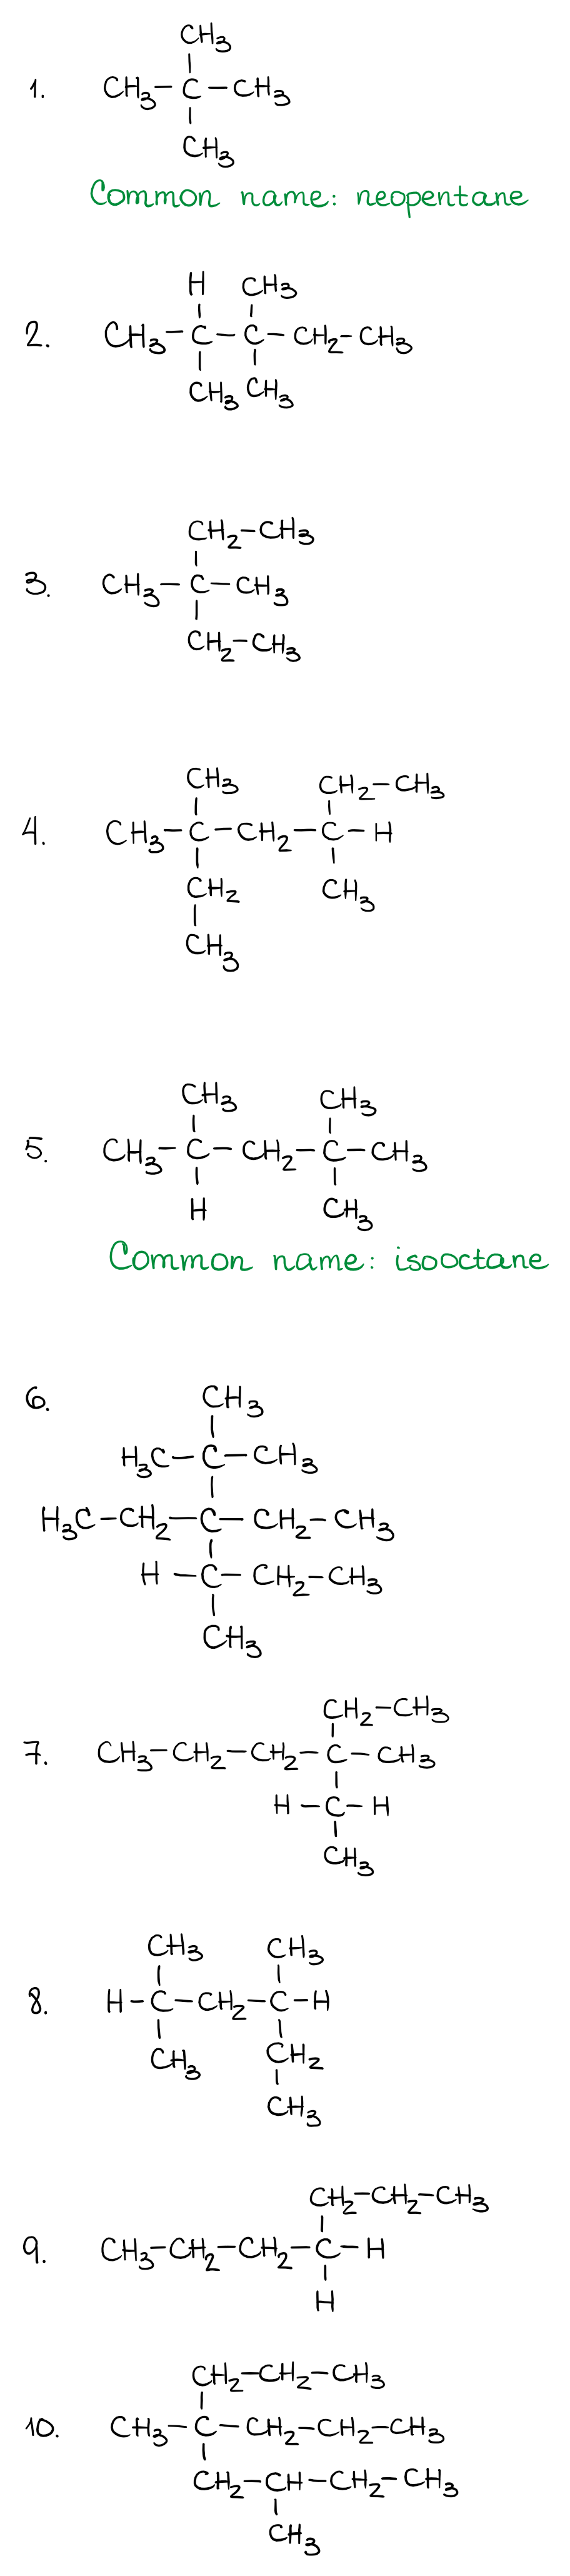 practice problems on alkane nomenclature